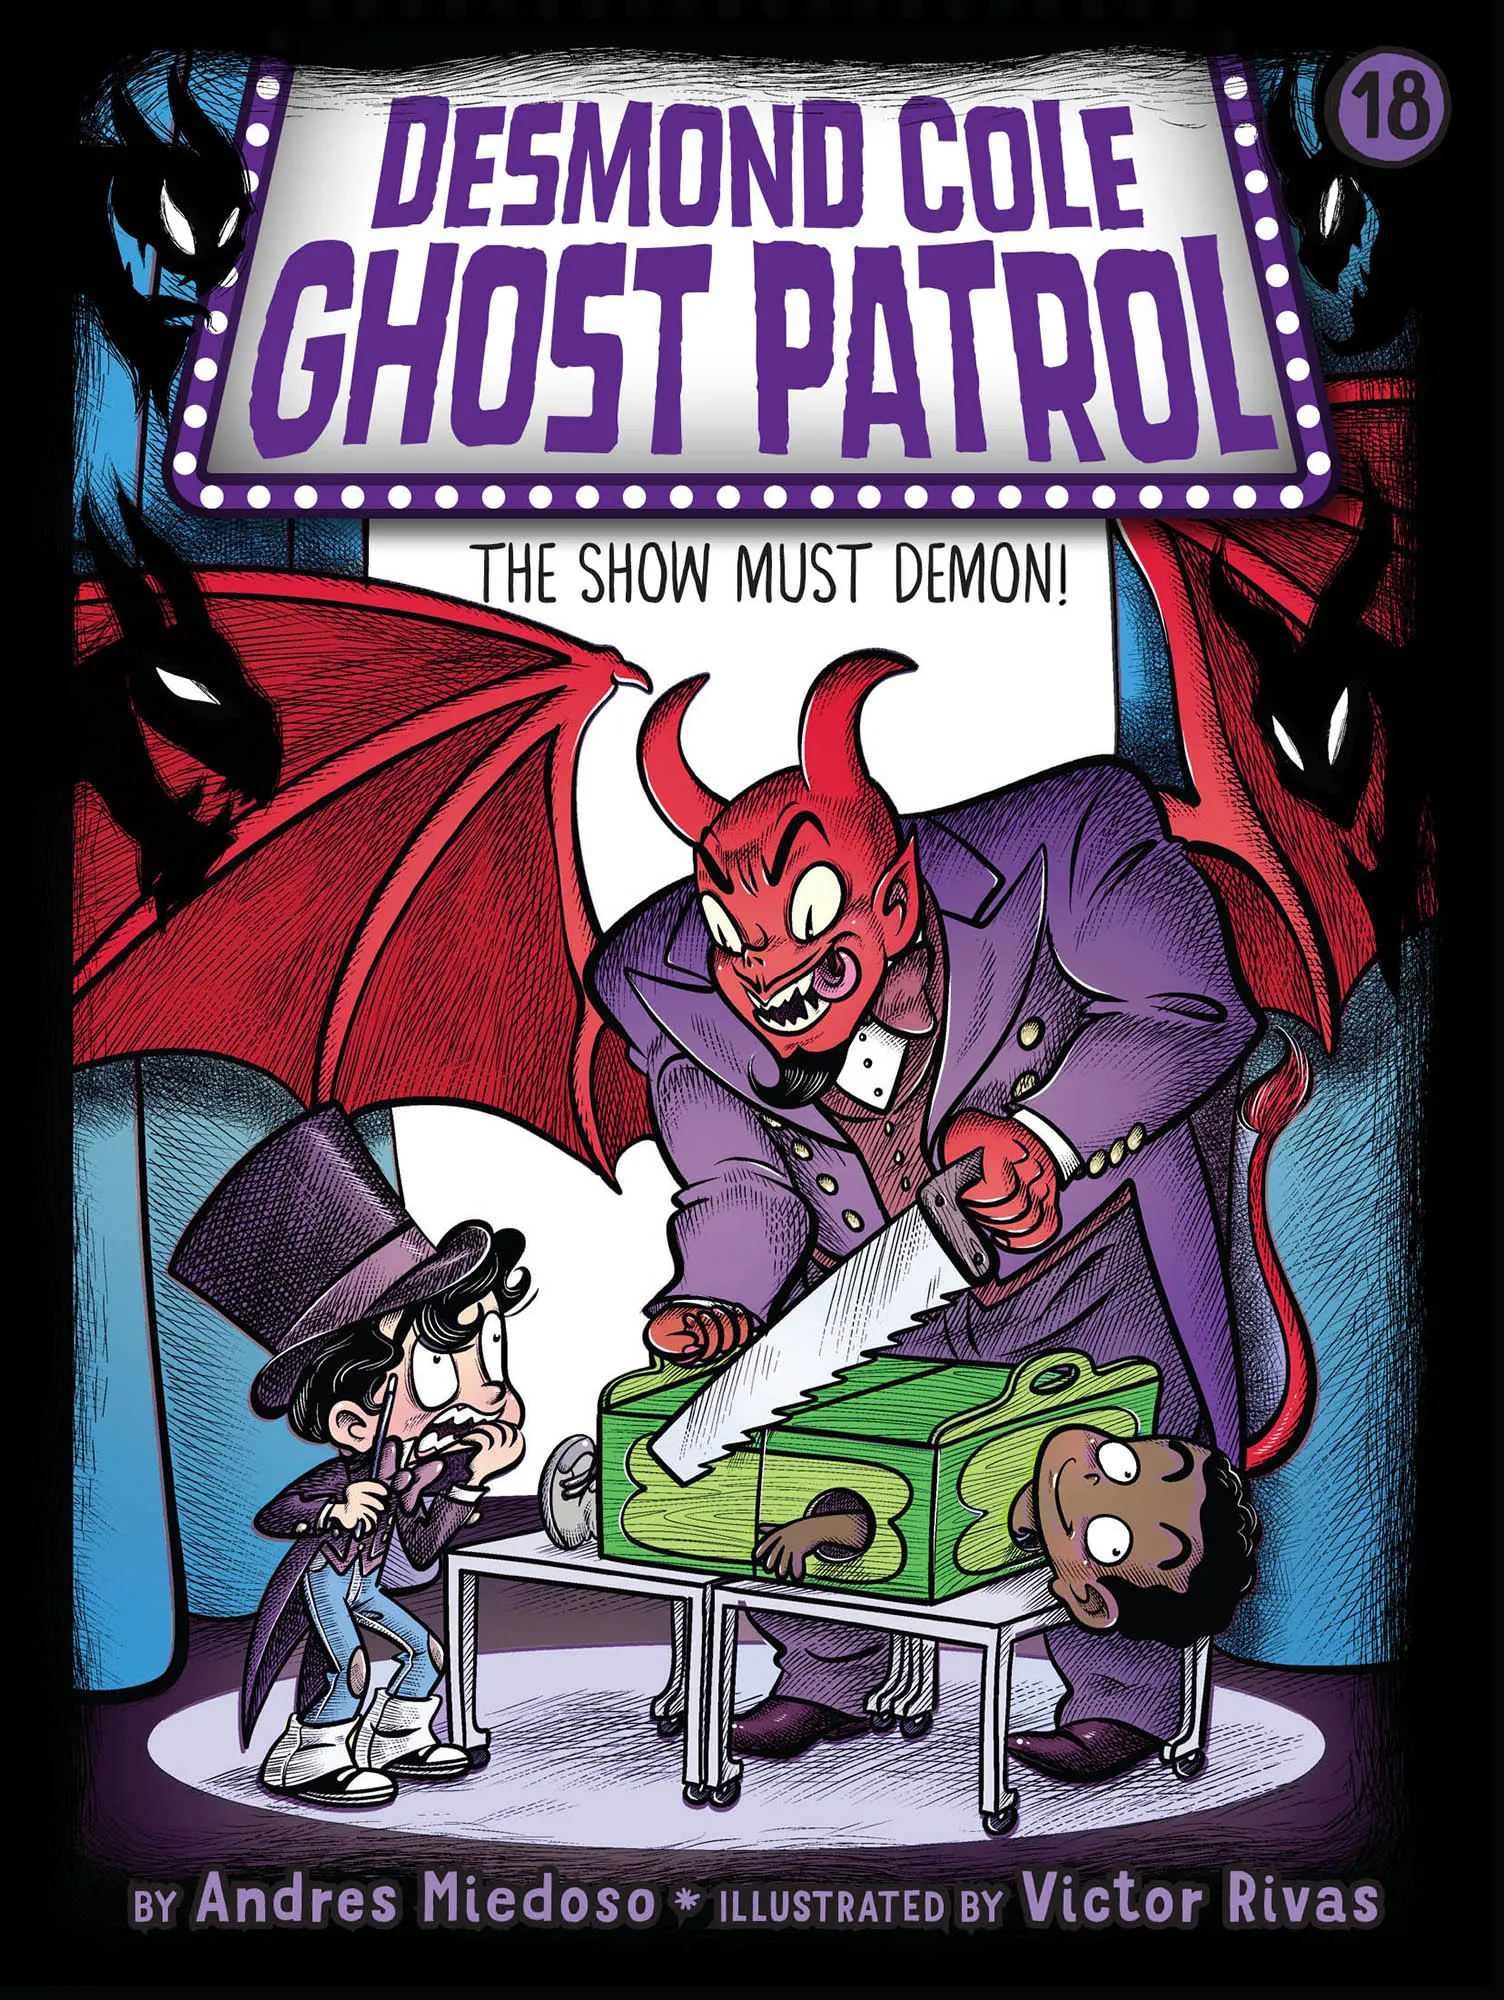 The Show Must Demon! (Desmond Cole Ghost Patrol #18)